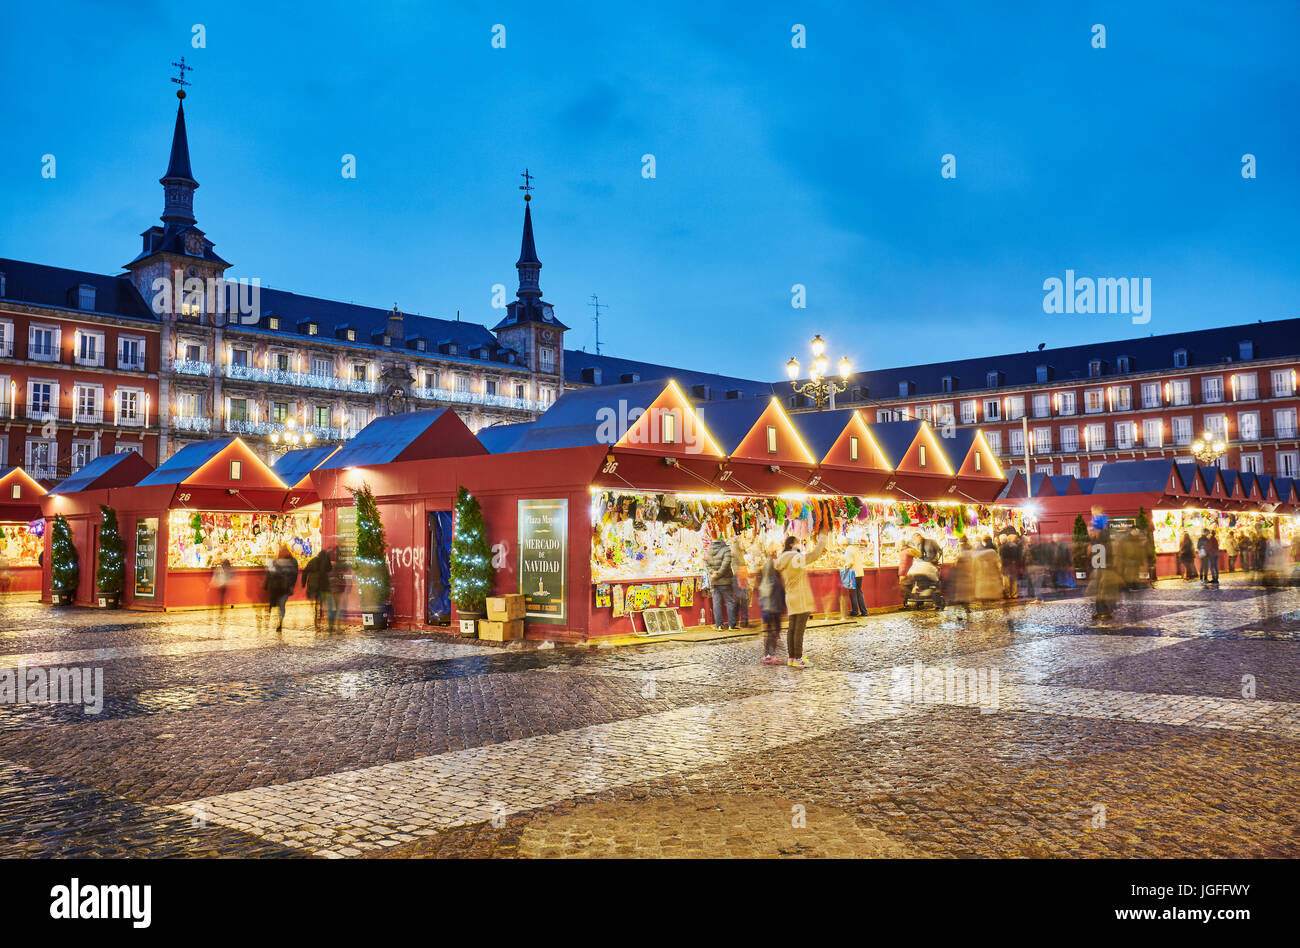 Madrid A Natale.Christmas Market In Plaza Mayor At Christmastime Madrid Spain Stock Photo Alamy